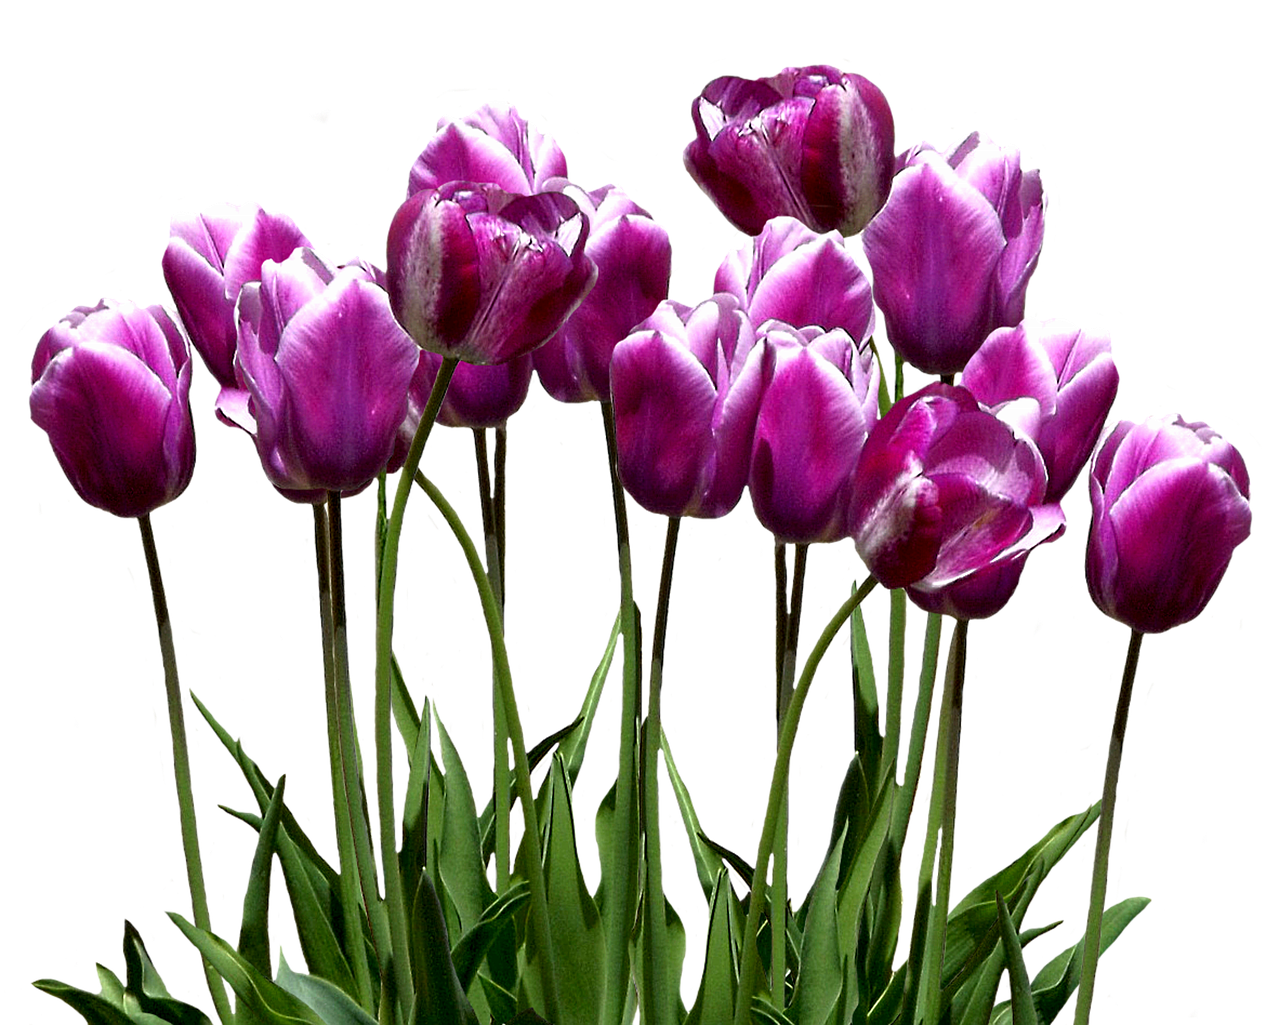 Vibrant_ Purple_ Tulips_ Against_ Black_ Background.jpg PNG image